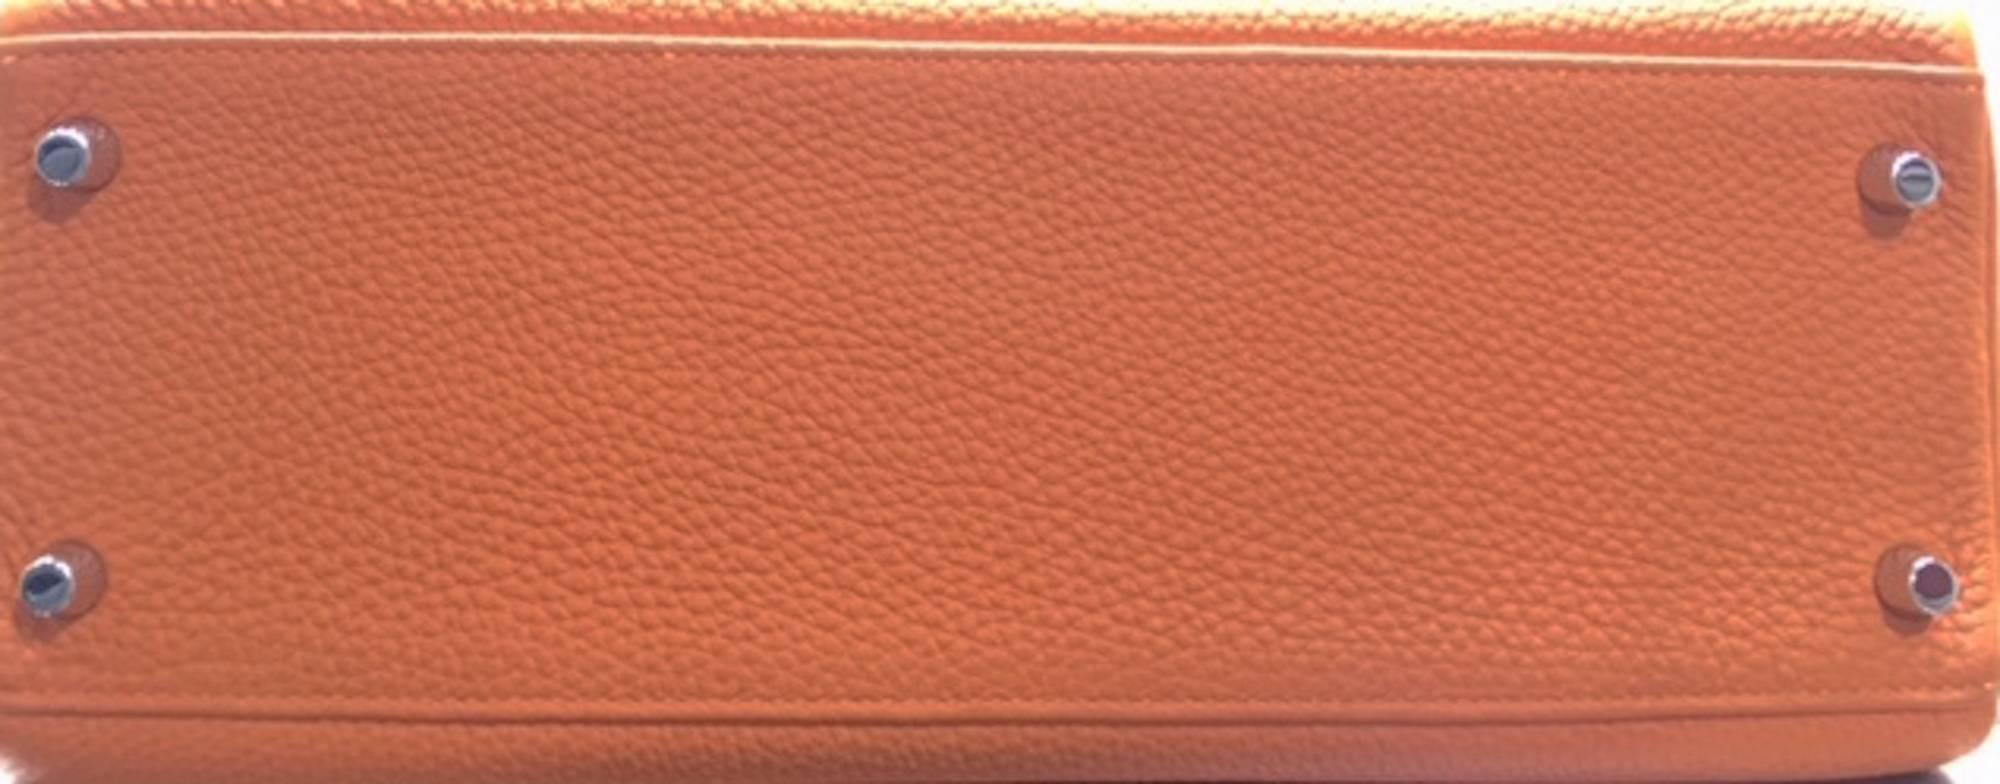 Hermes 32cm Kelly Retourne Bag Orange Togo Leather in Palladium Plated  3